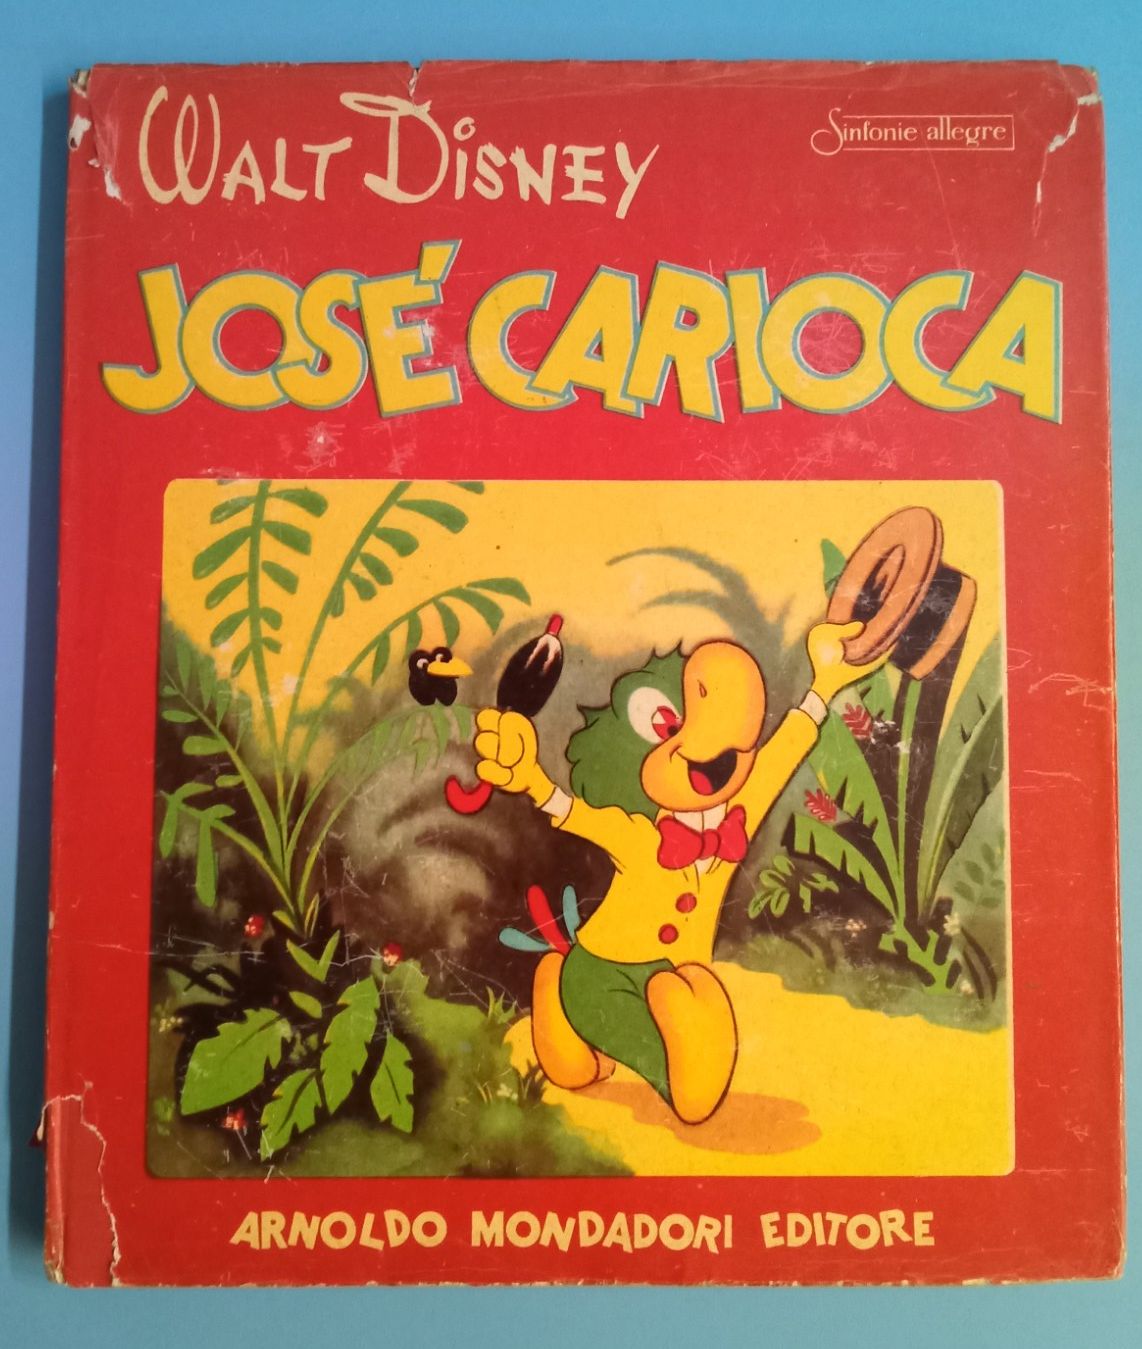 Walt Disney Jose Carioca - Collana Sinfonie allegre